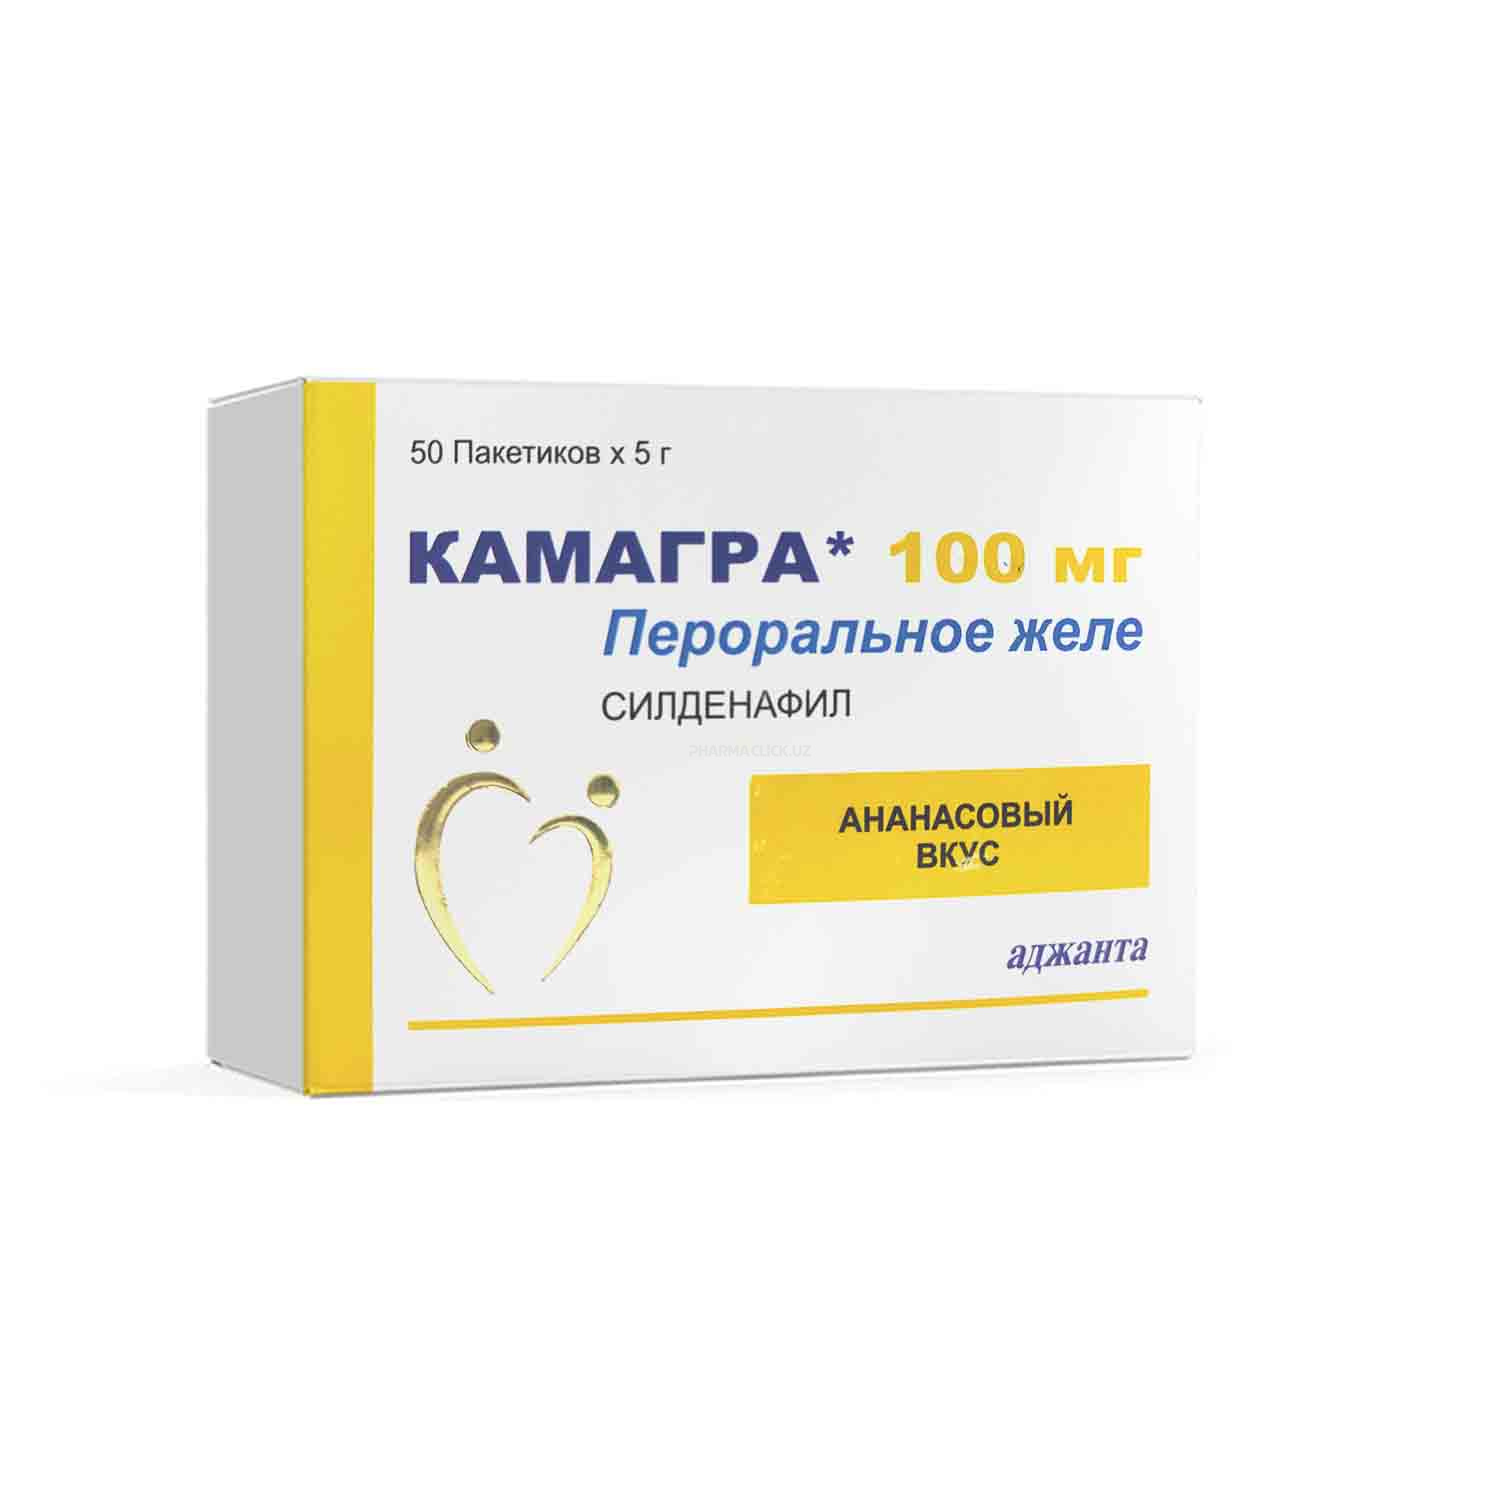 Kamagra jele 100 mg/ 5 g № 1, sashe